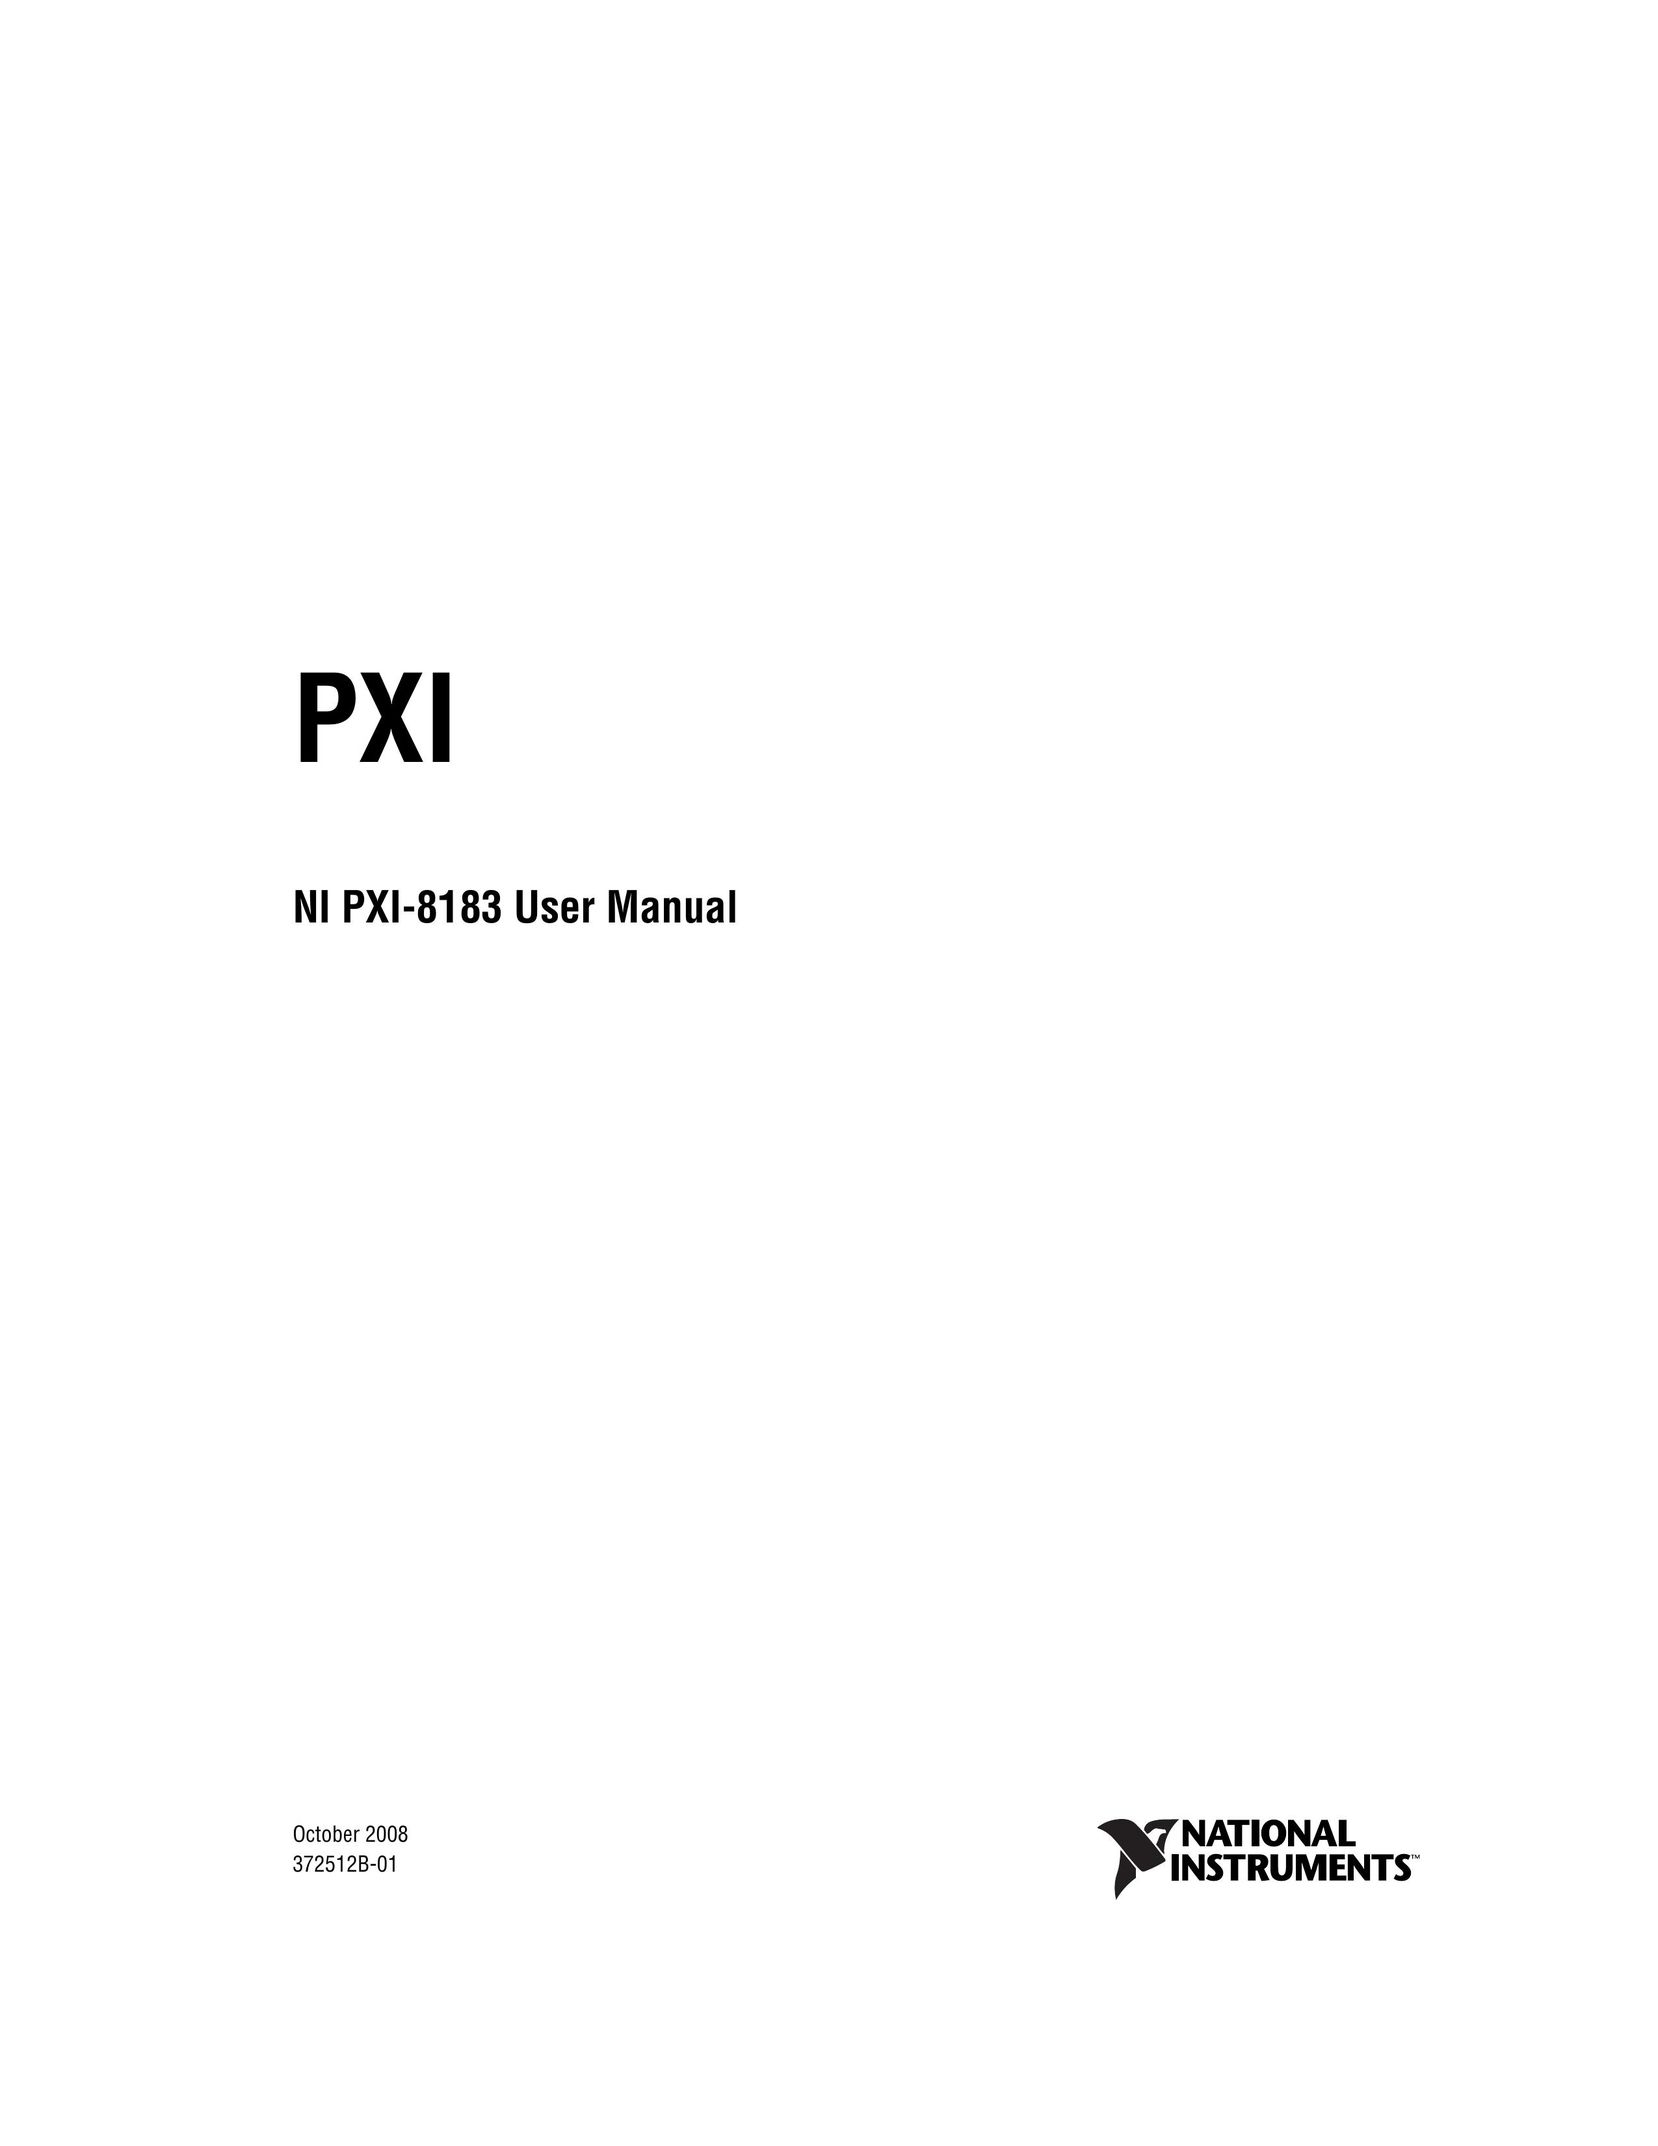 National Instruments NI PXI-8183 Personal Computer User Manual